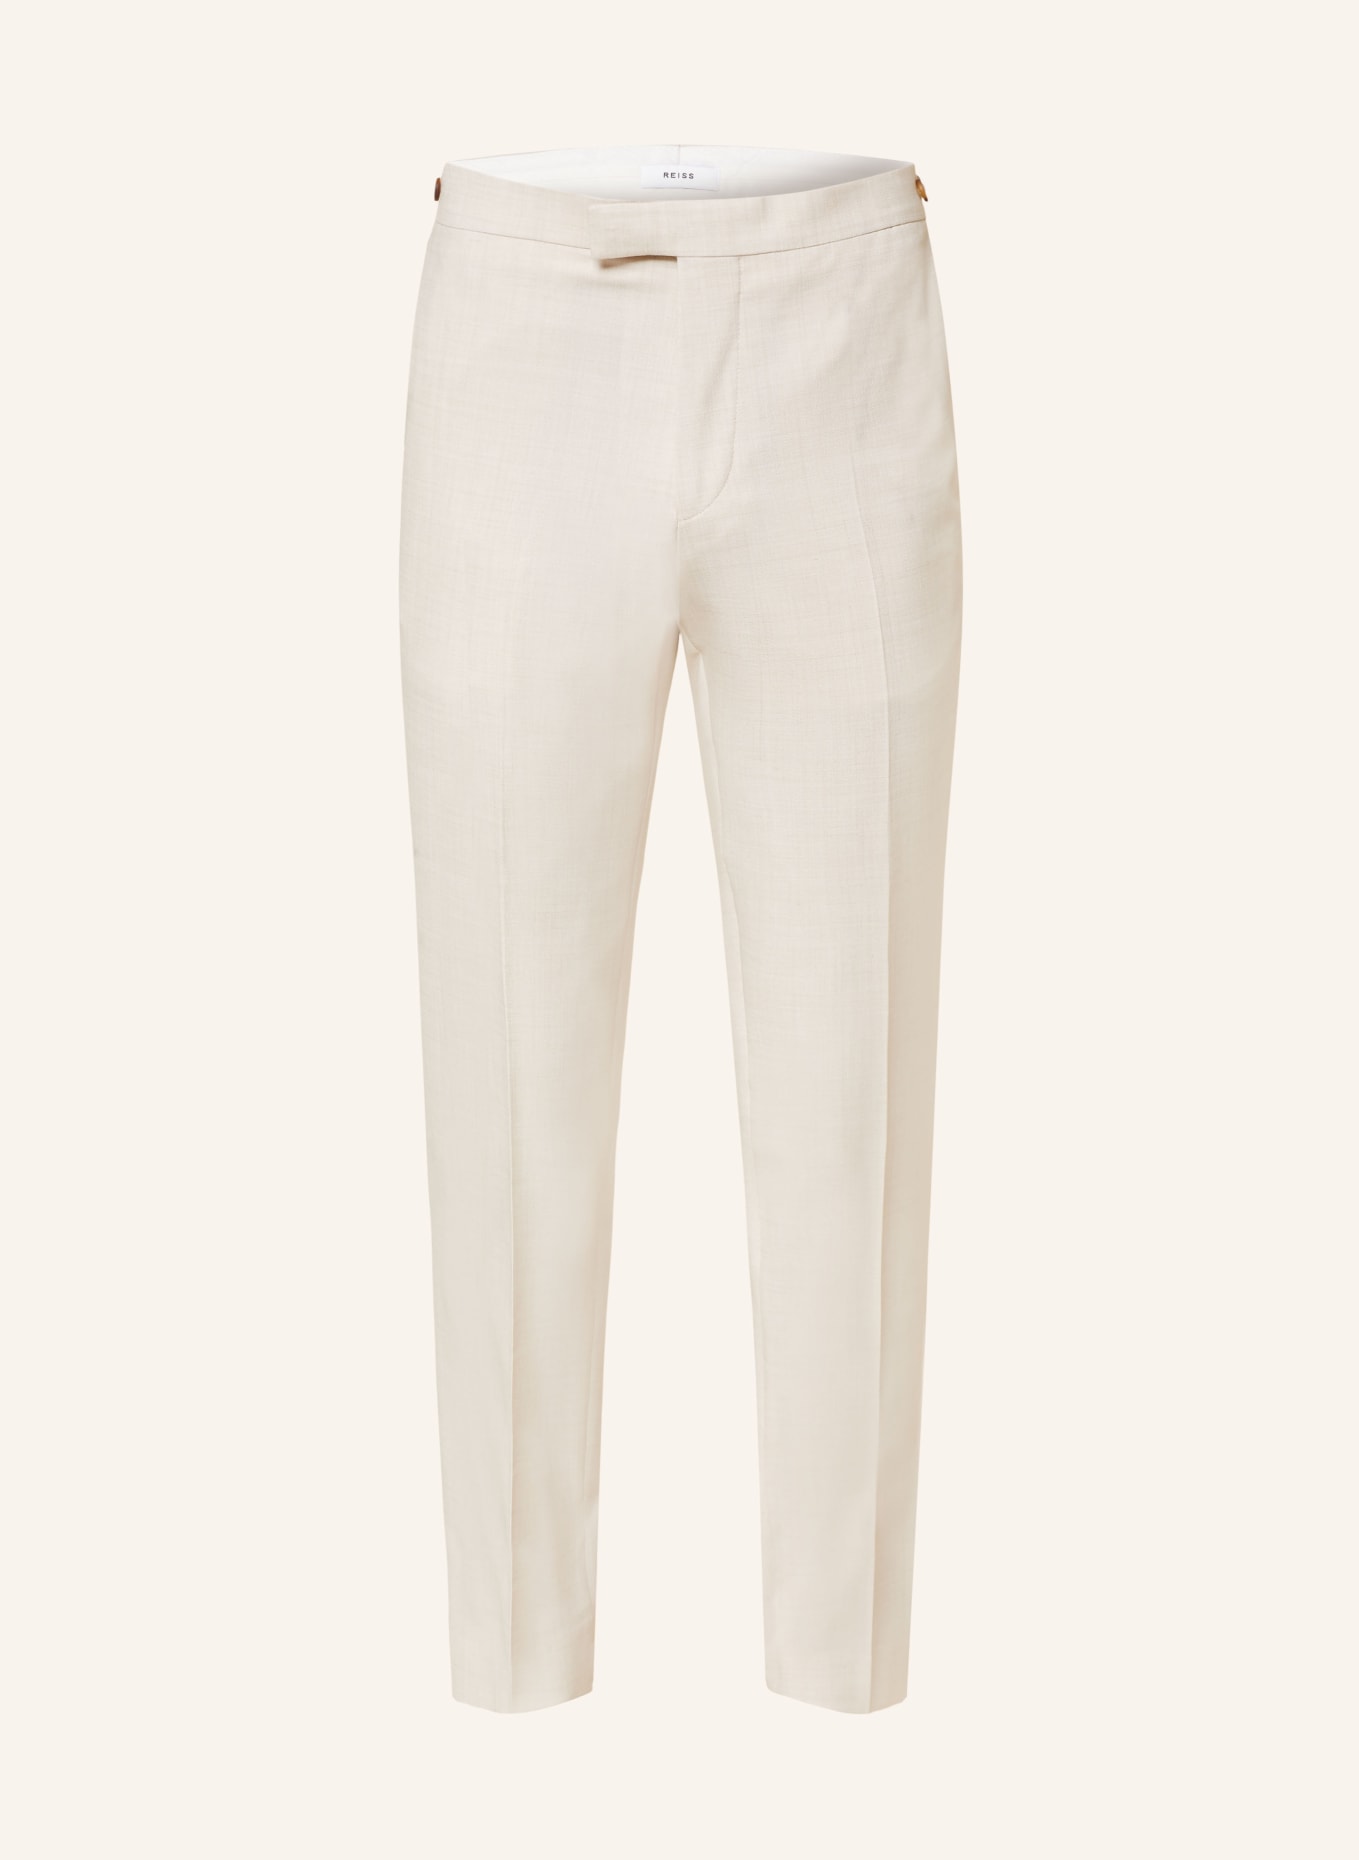 REISS Anzughose BELMONT Extra Slim Fit, Farbe: 04 STONE (Bild 1)